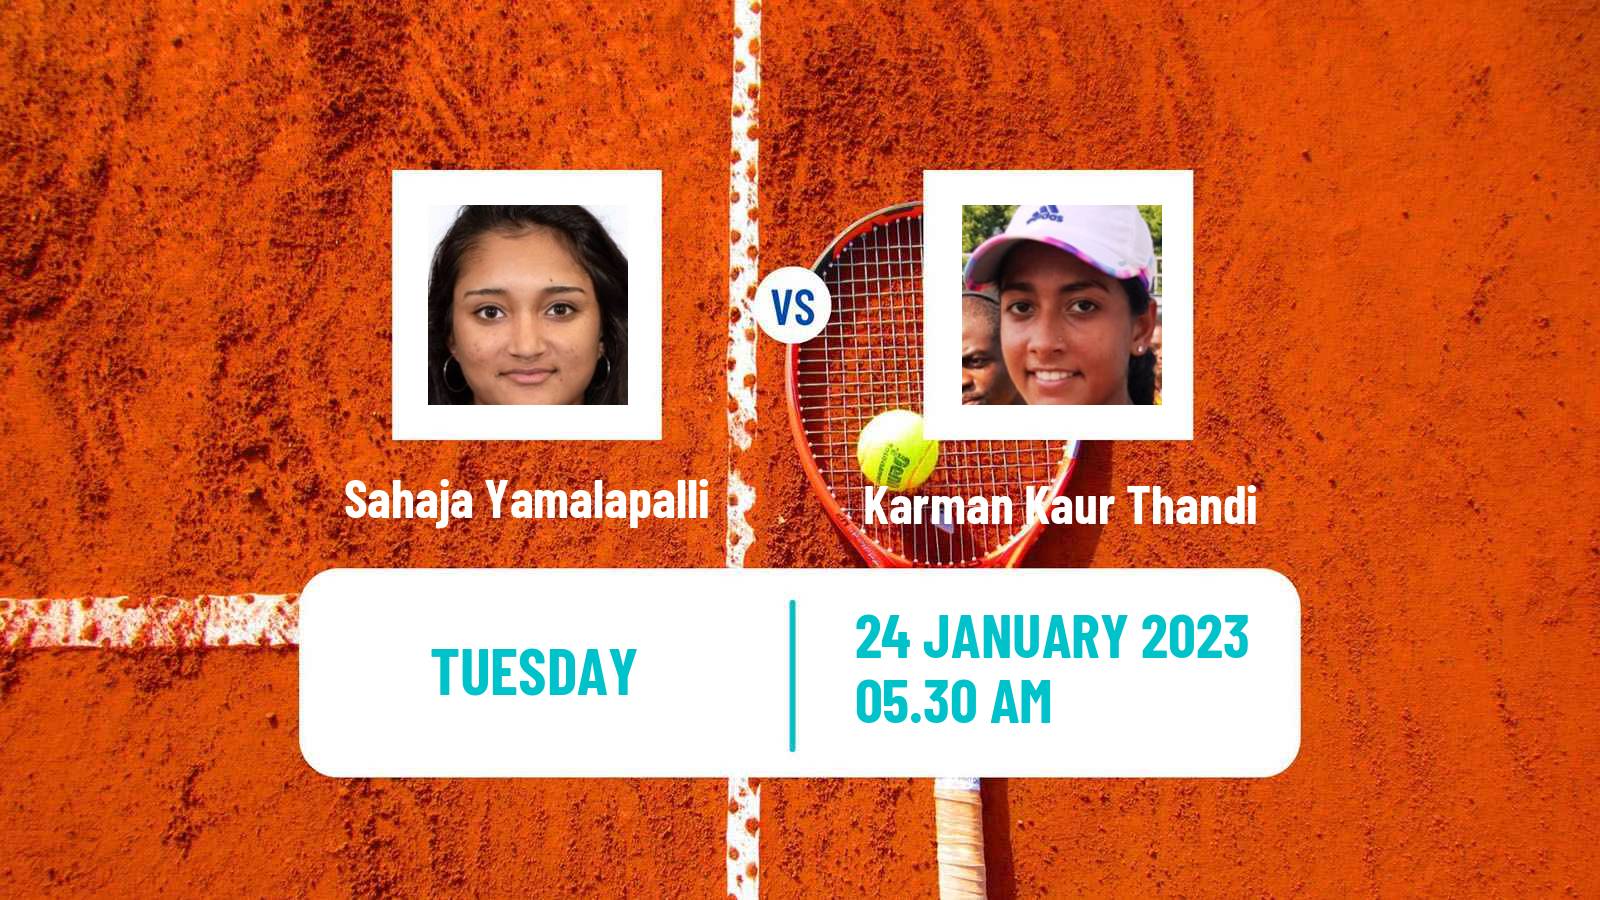 Tennis ITF Tournaments Sahaja Yamalapalli - Karman Kaur Thandi